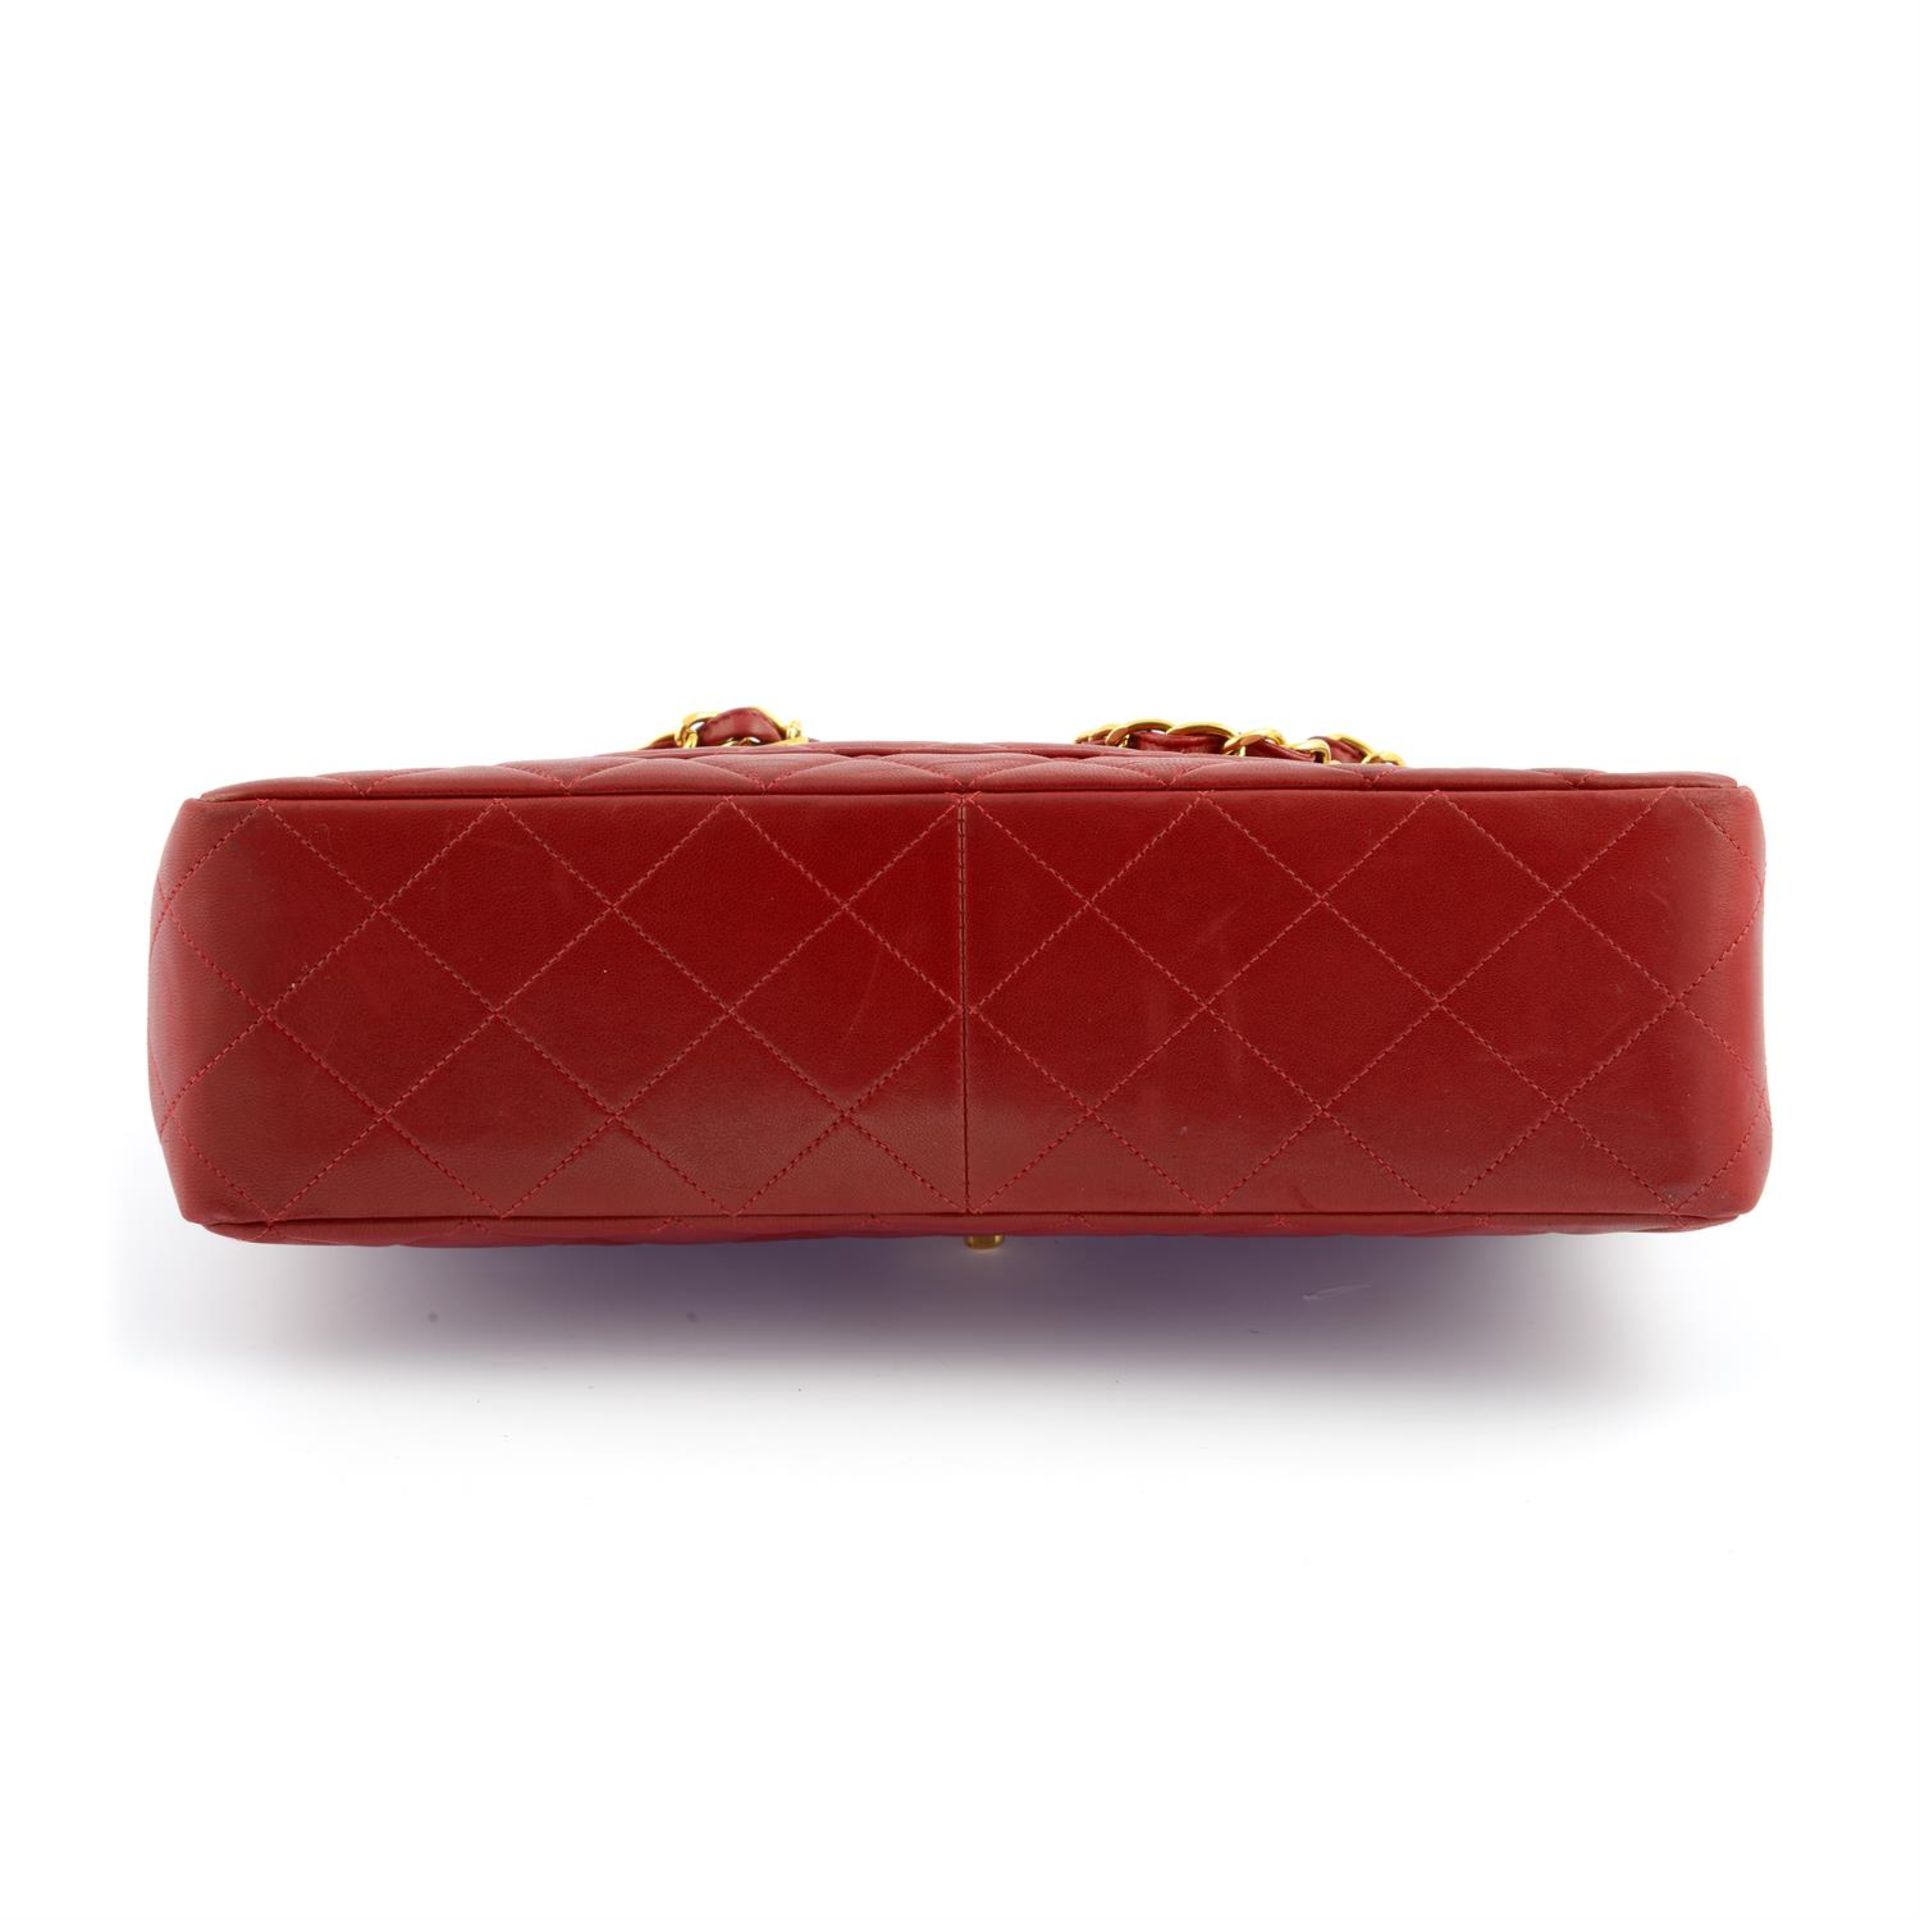 CHANEL - a red lambskin leather Jumbo flap handbag. - Bild 4 aus 6